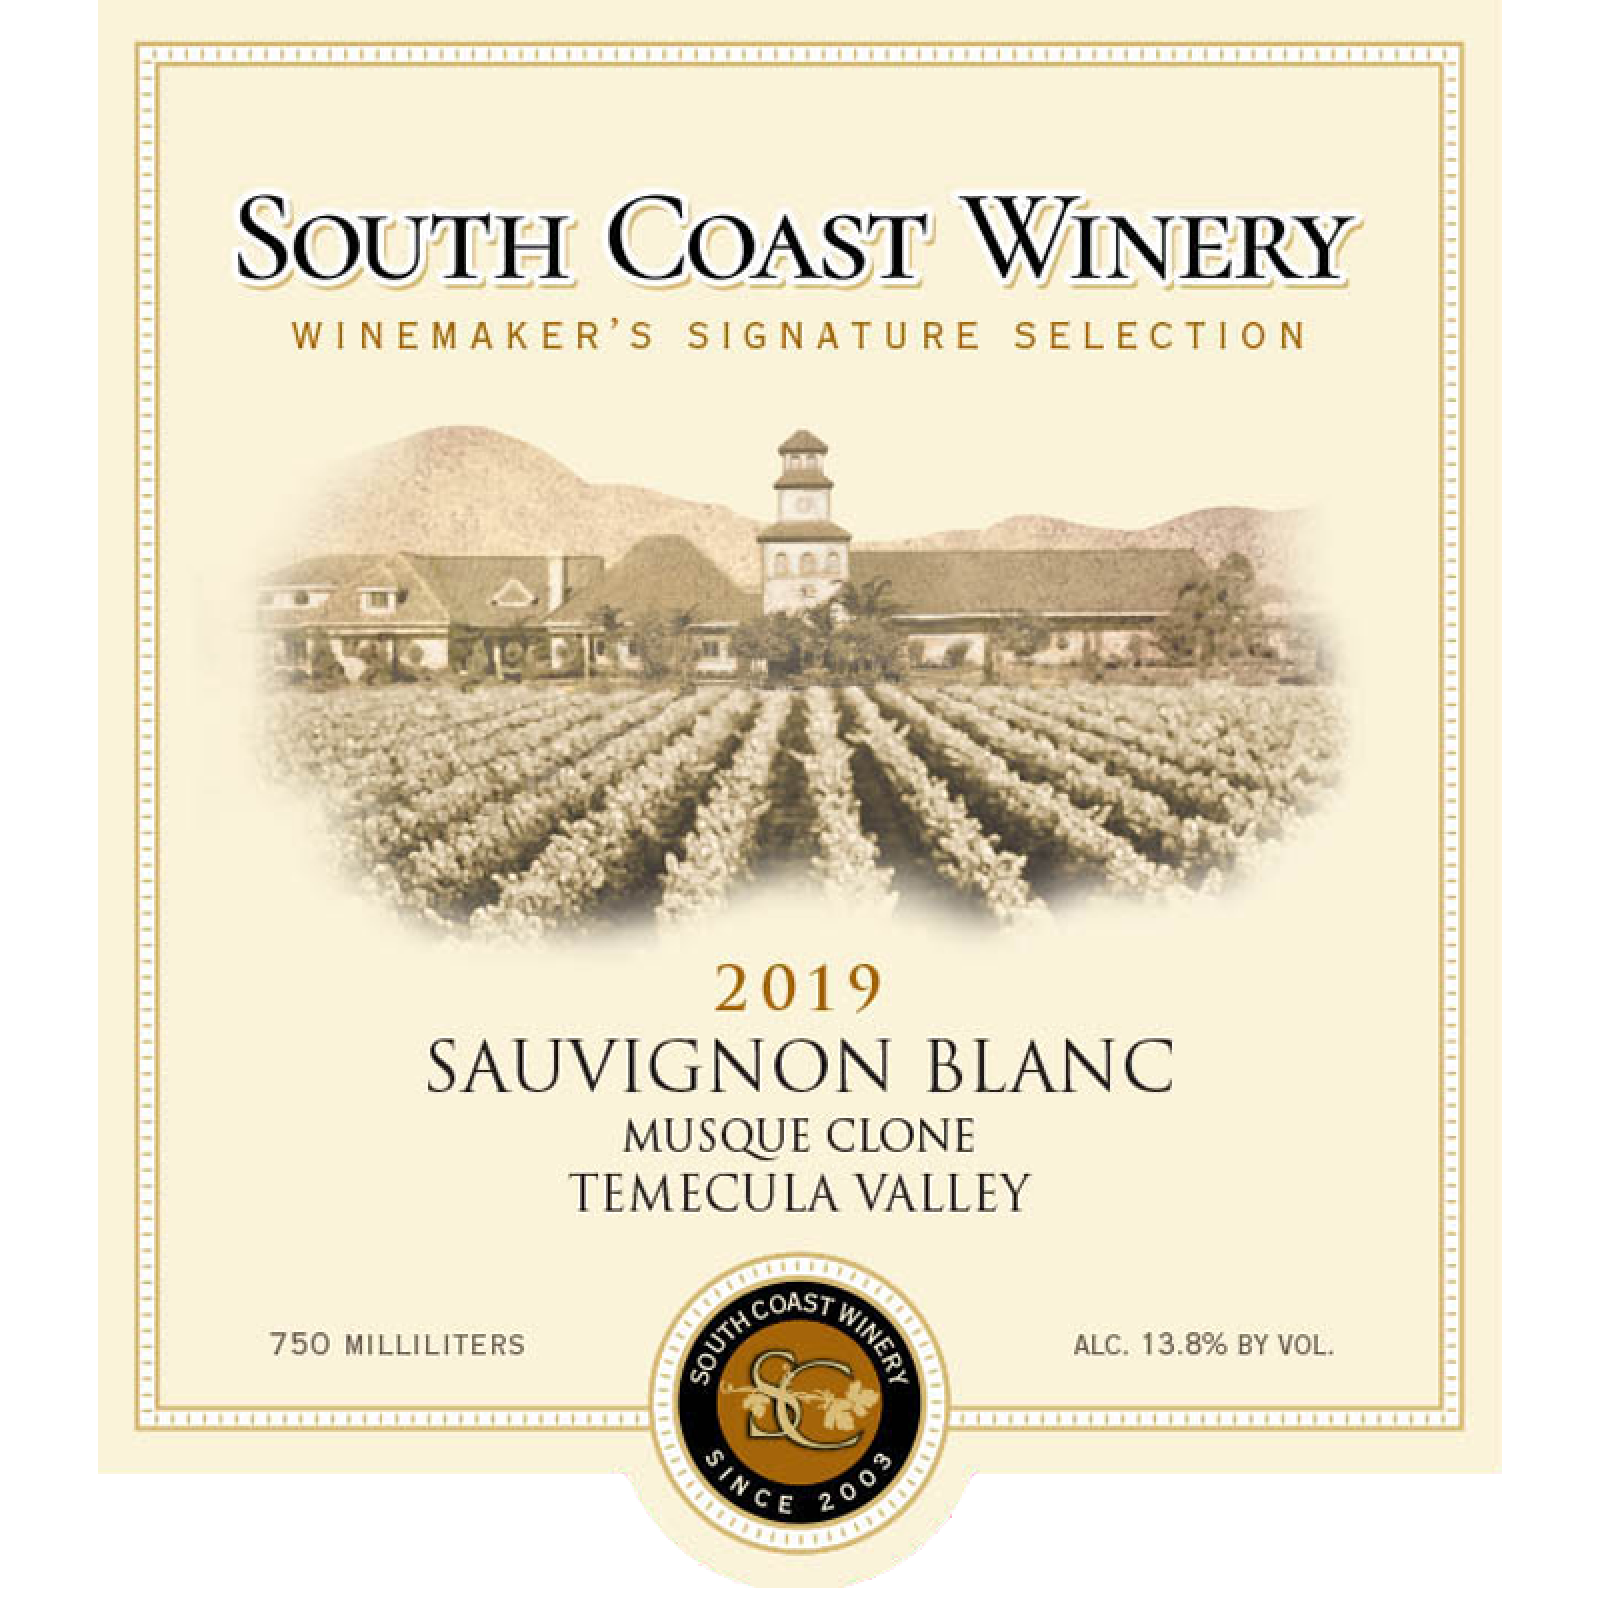 South Coast Winery Sauvignon Blanc 2019